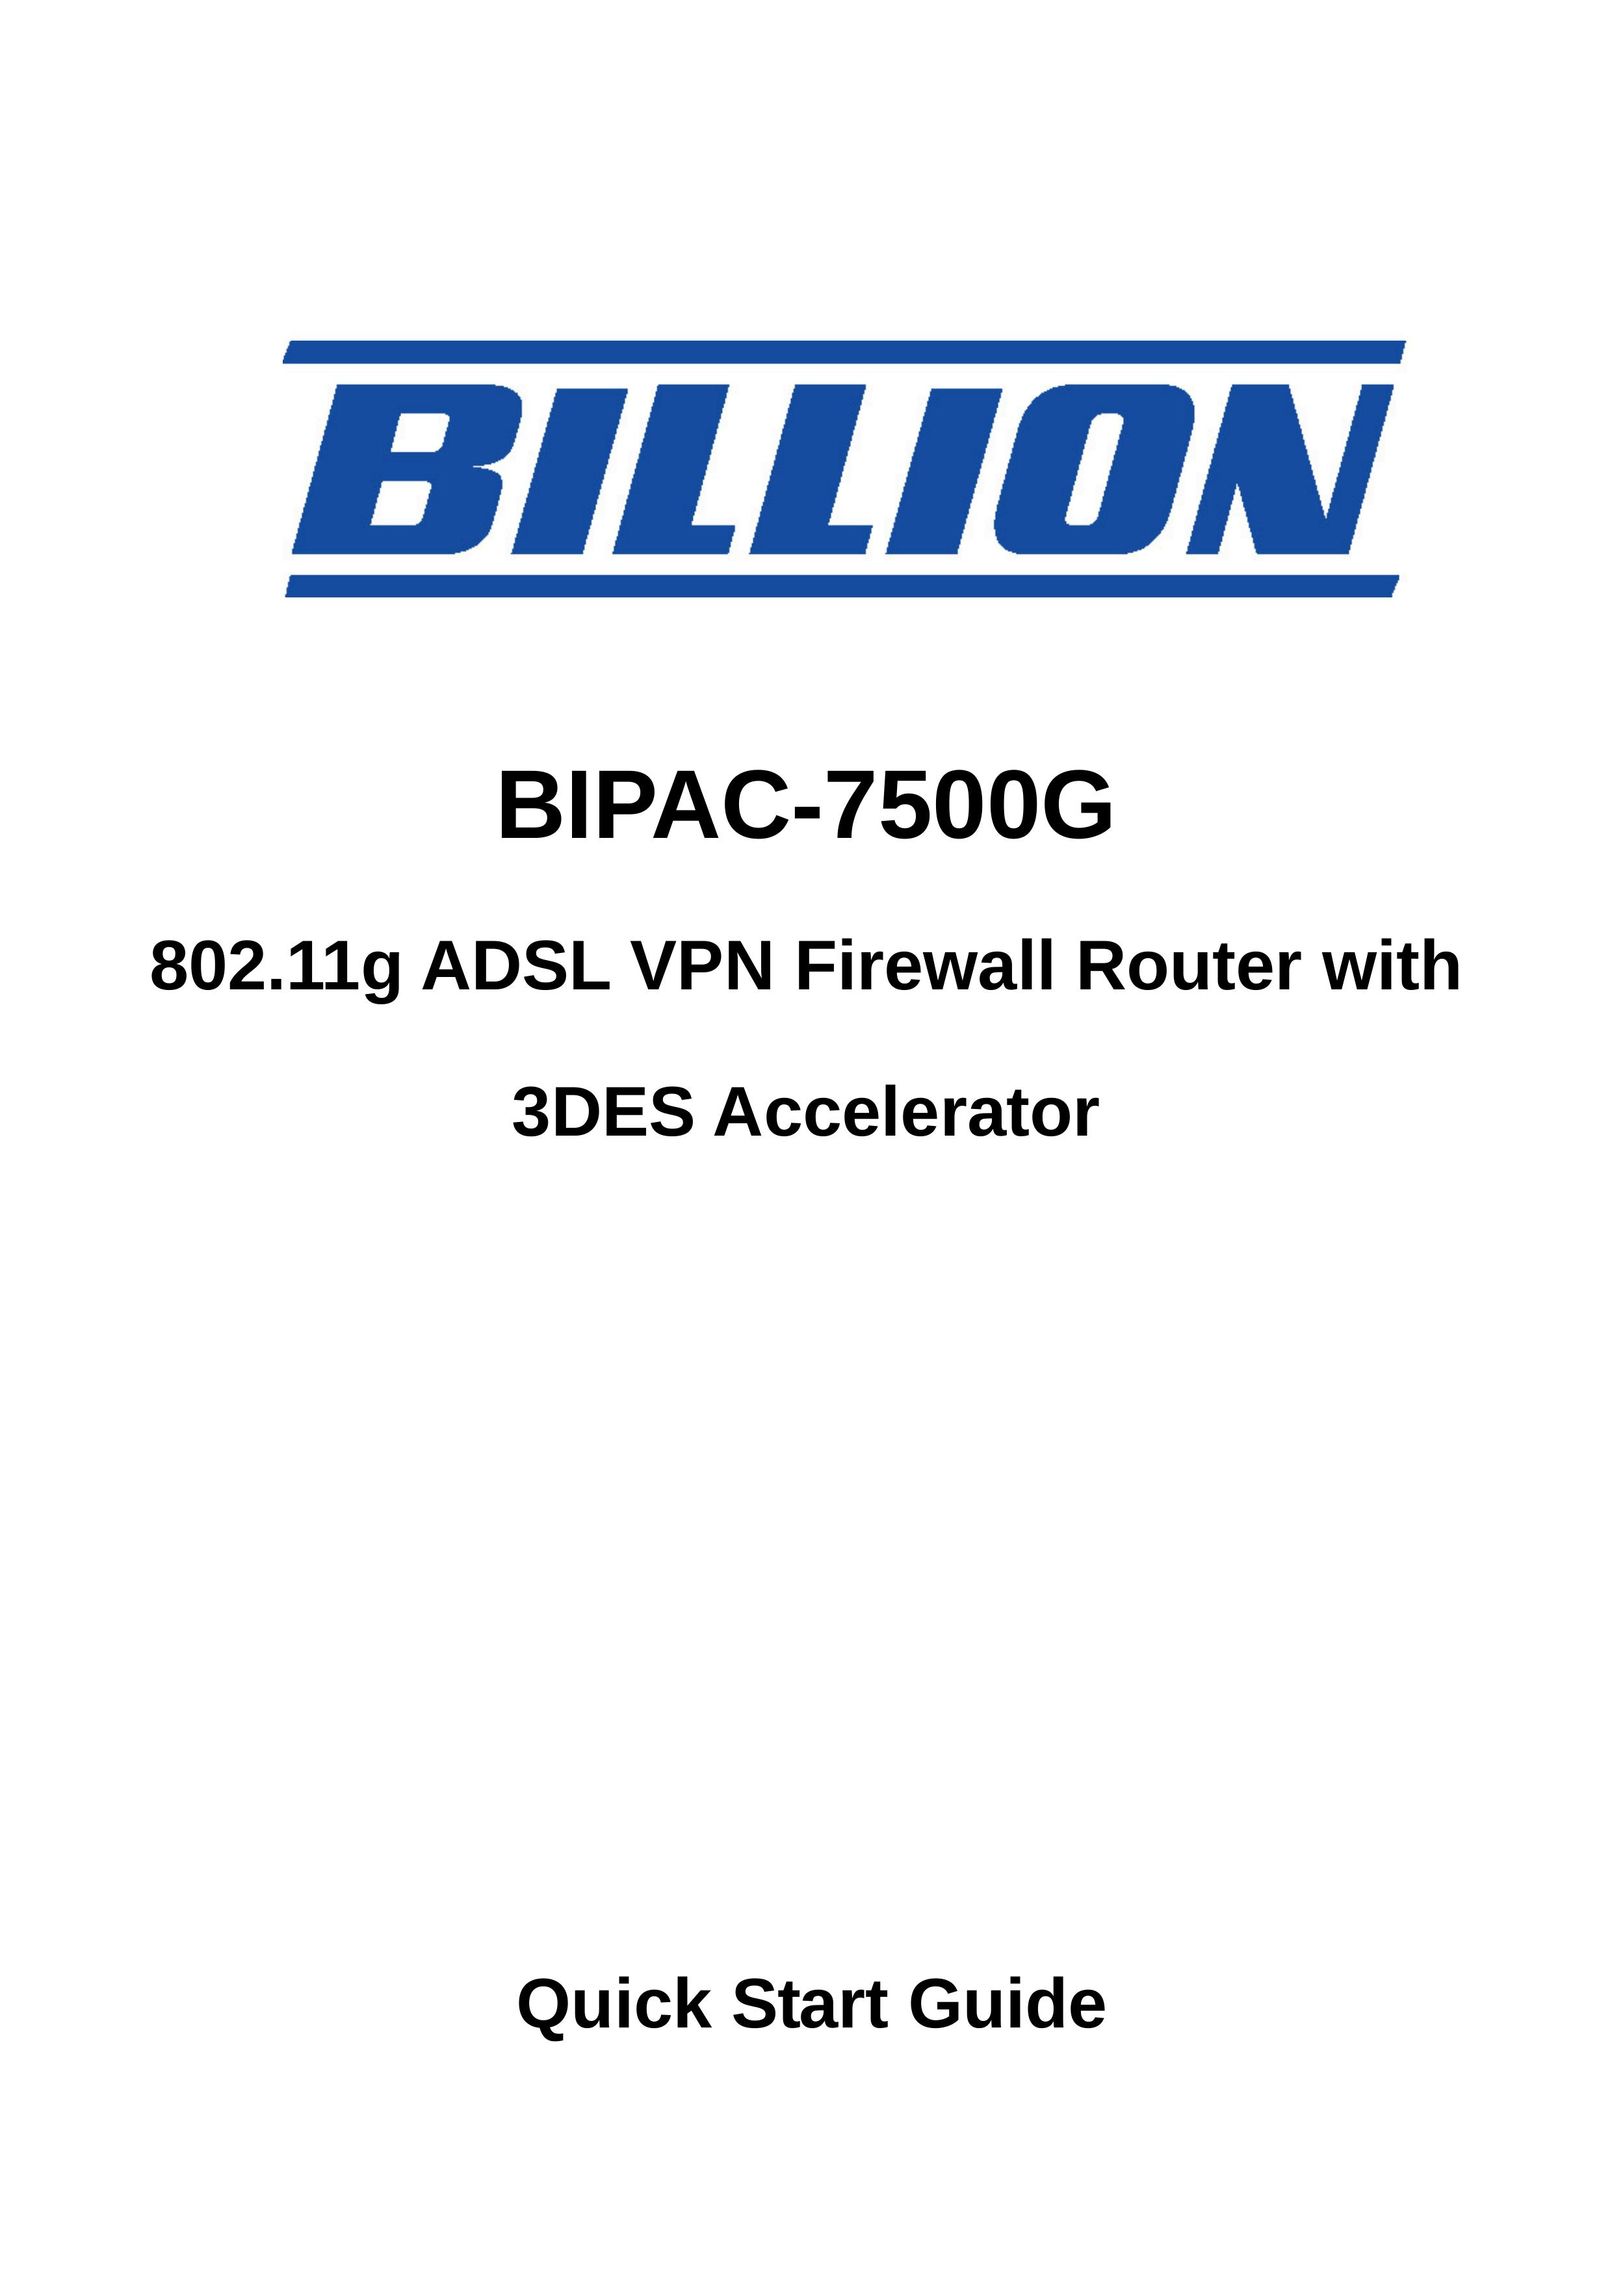 Billion Electric Company BIPAC 7500 Network Card User Manual